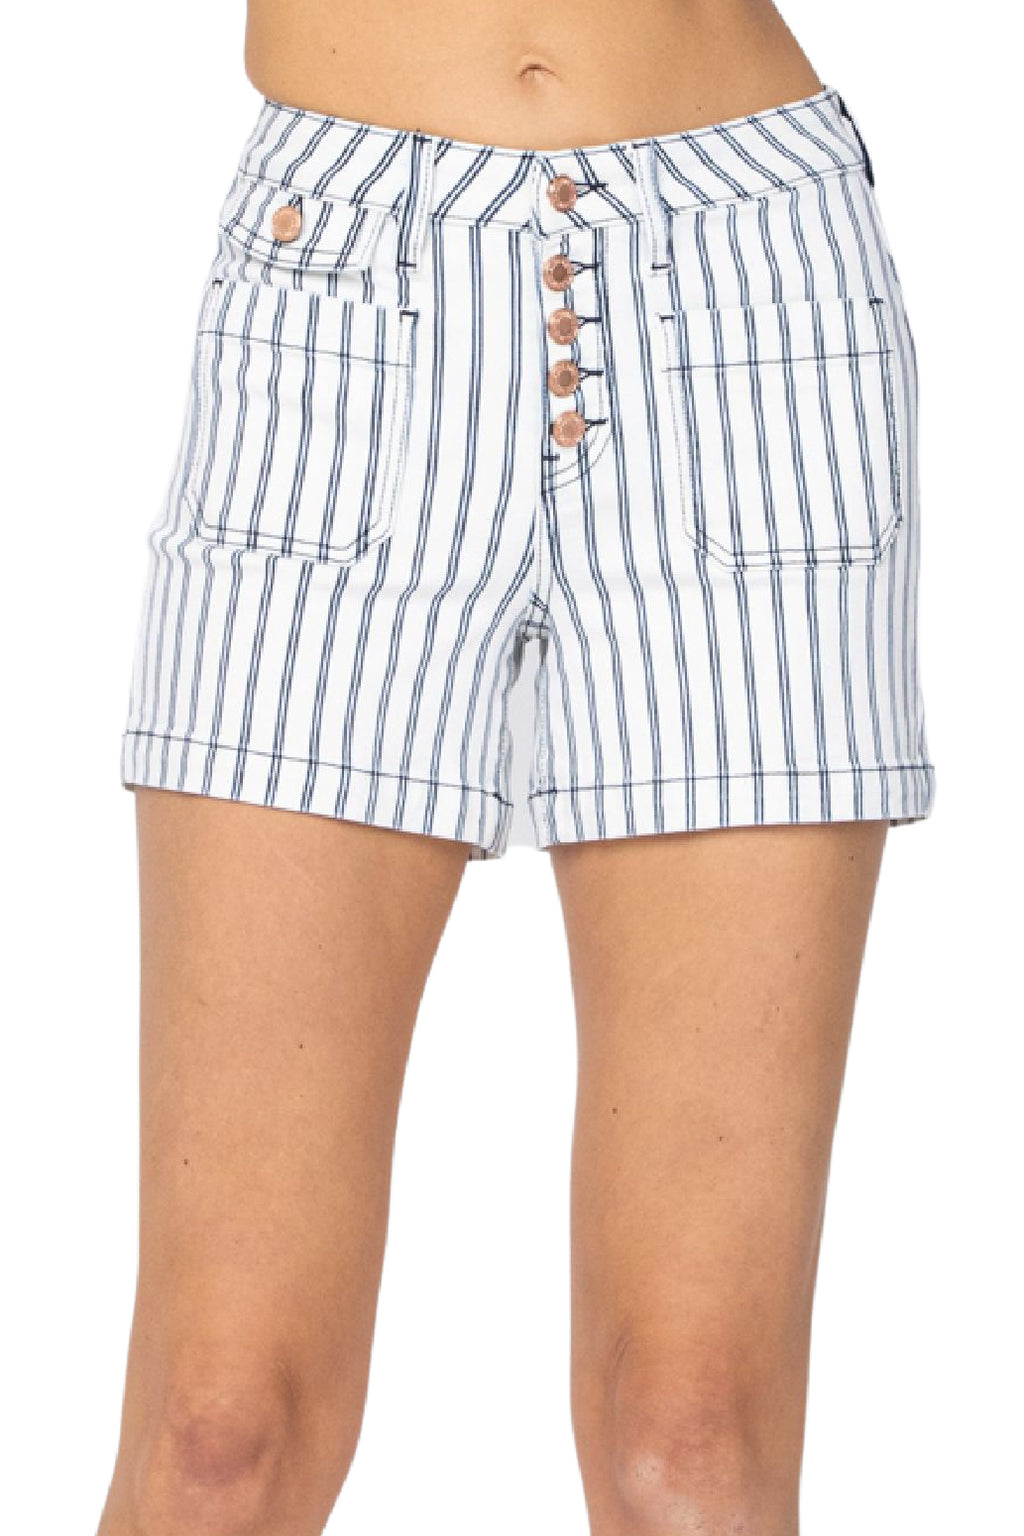 Judy Blue Stripe Patch Pocket High Waist Shorts Style 150078